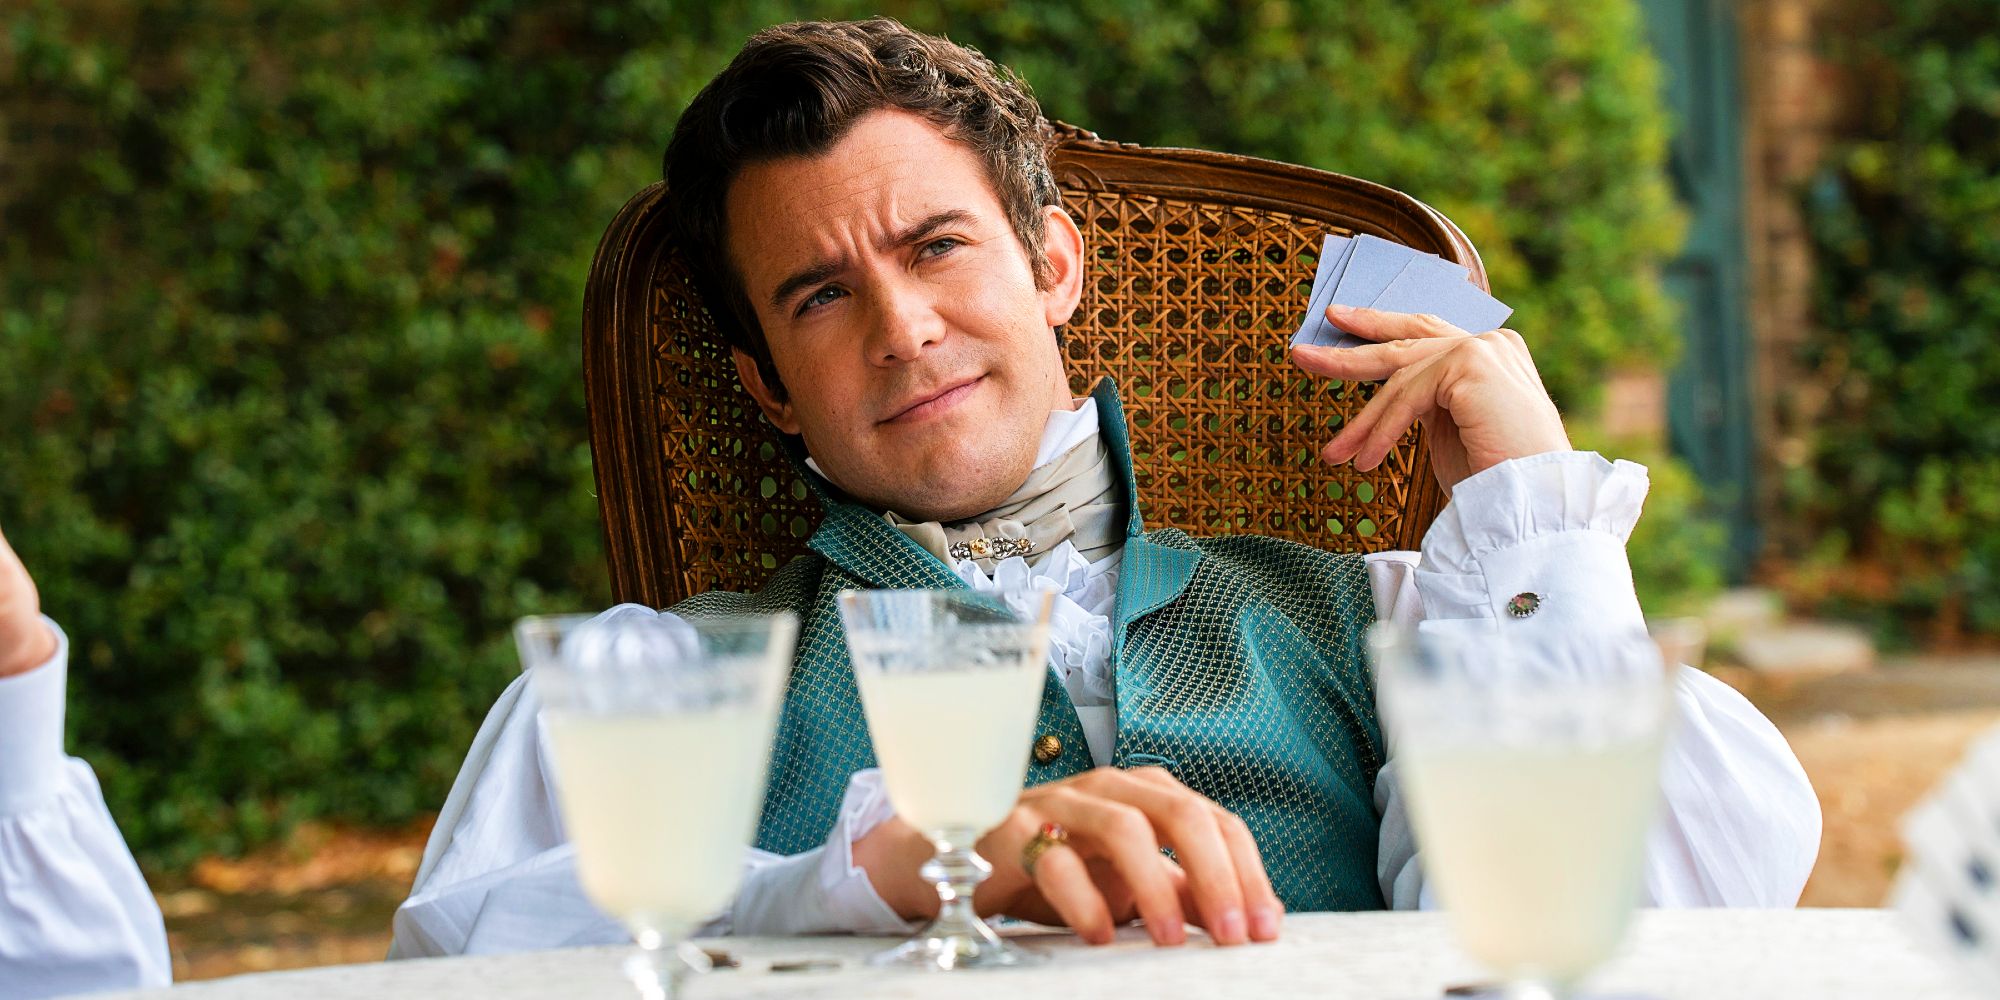 Luke Thompson como Benedict Bridgerton jogando cartas com bebidas na frente dele no episódio 2 da 3ª temporada de Bridgerton